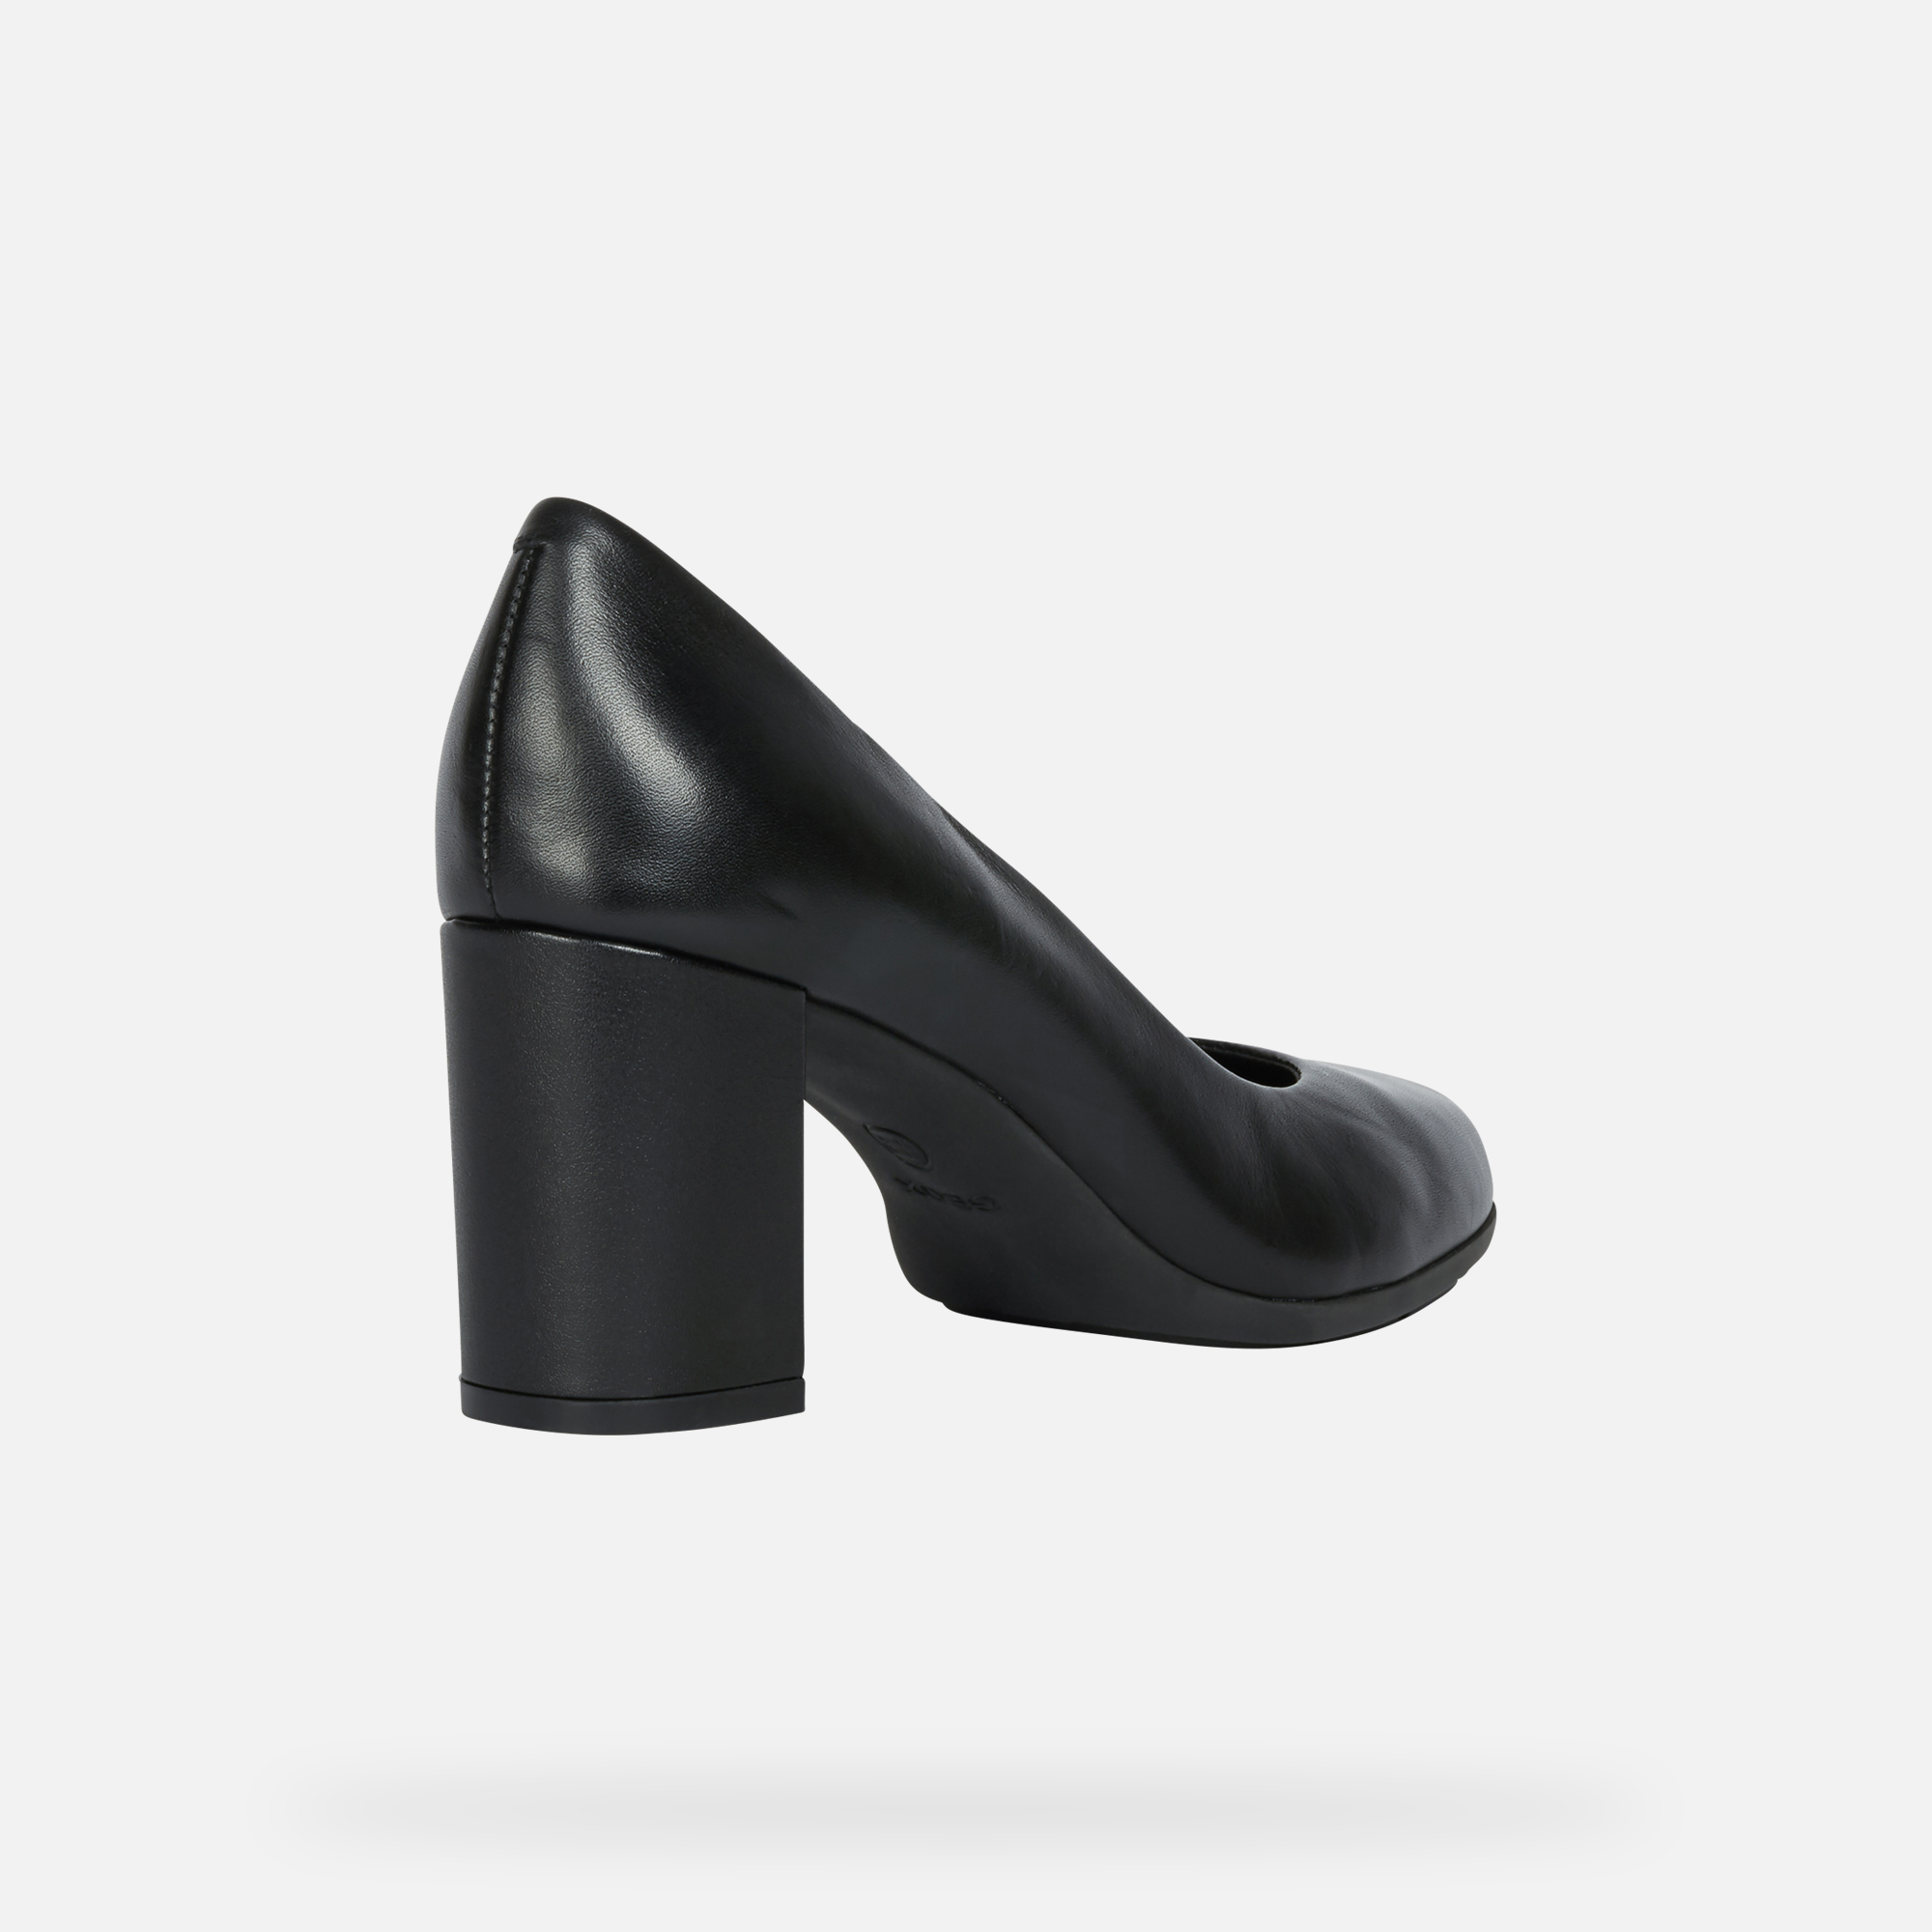 Geox ANNYA Woman Black Shoes | Geox Spring/Summer